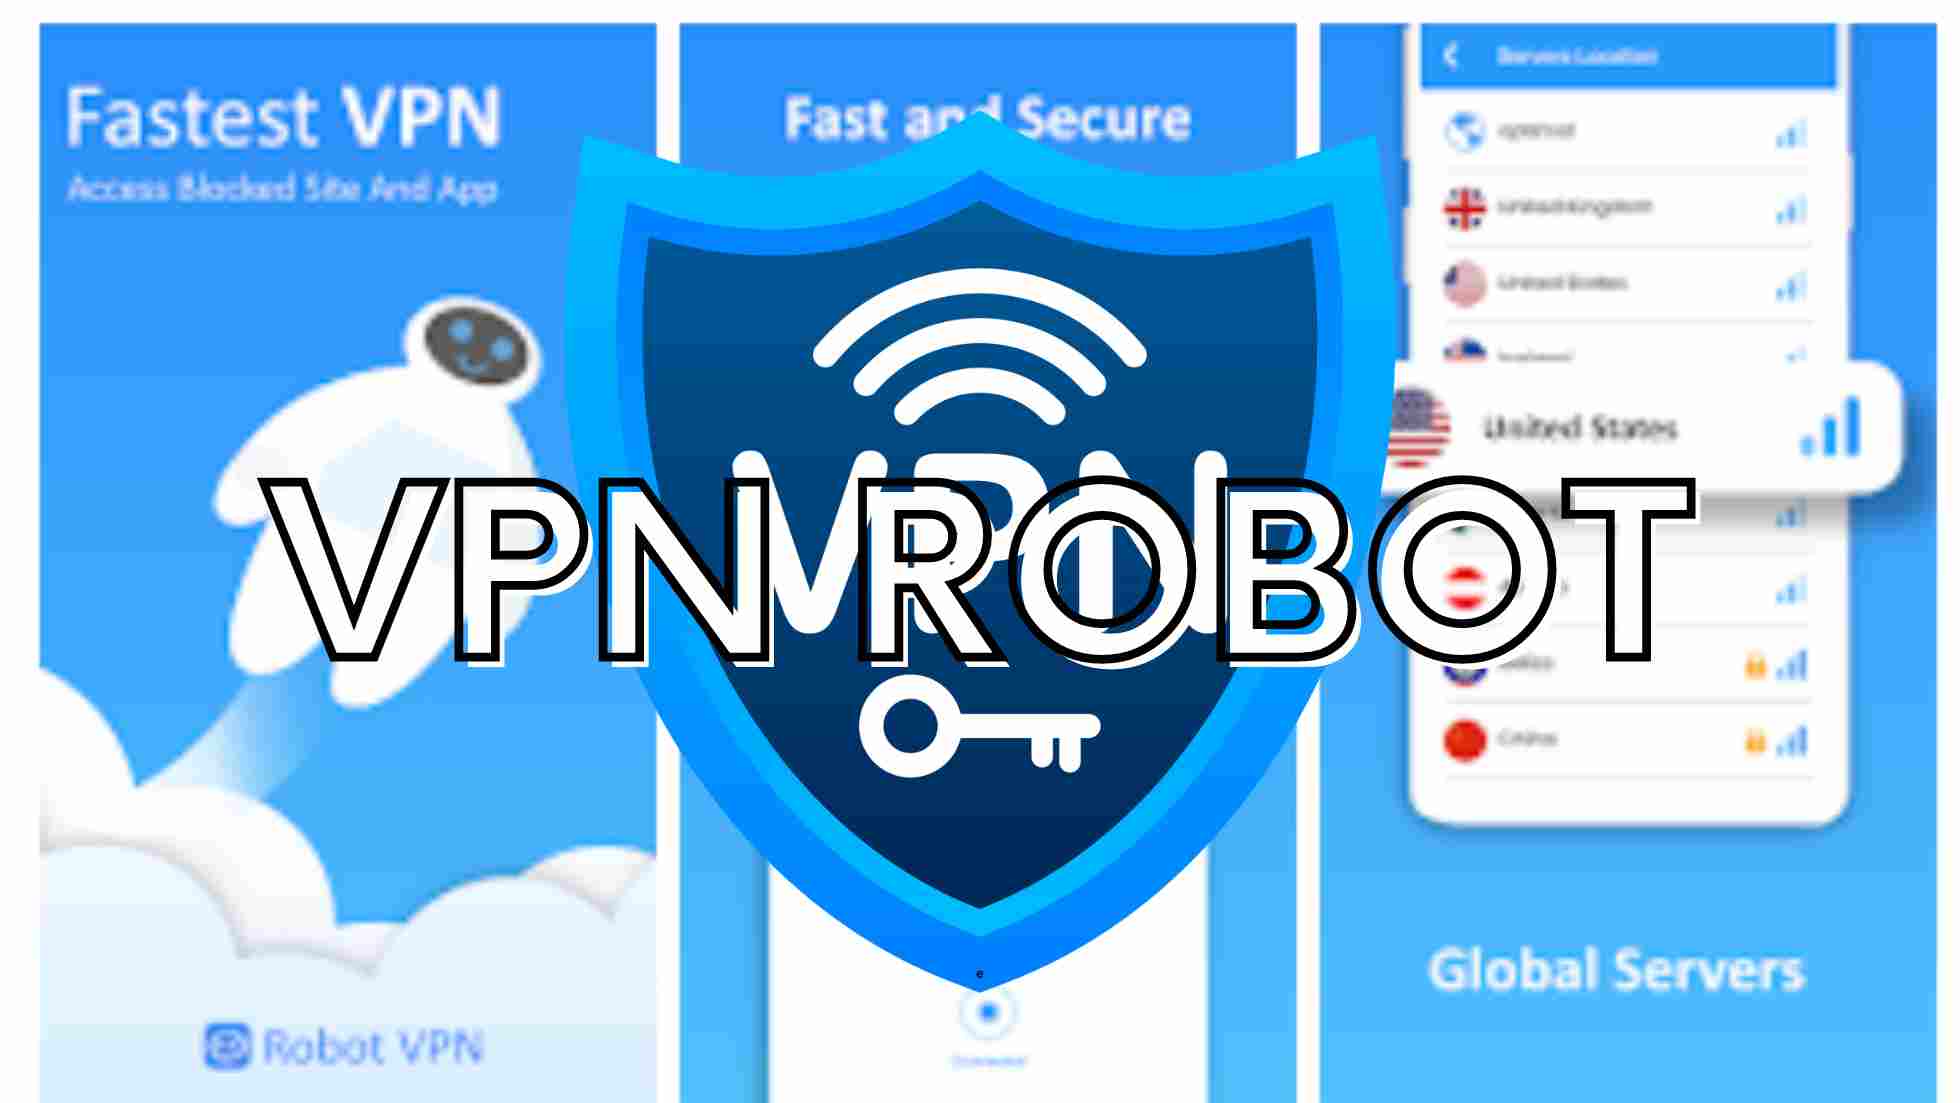 VPN Robot APK